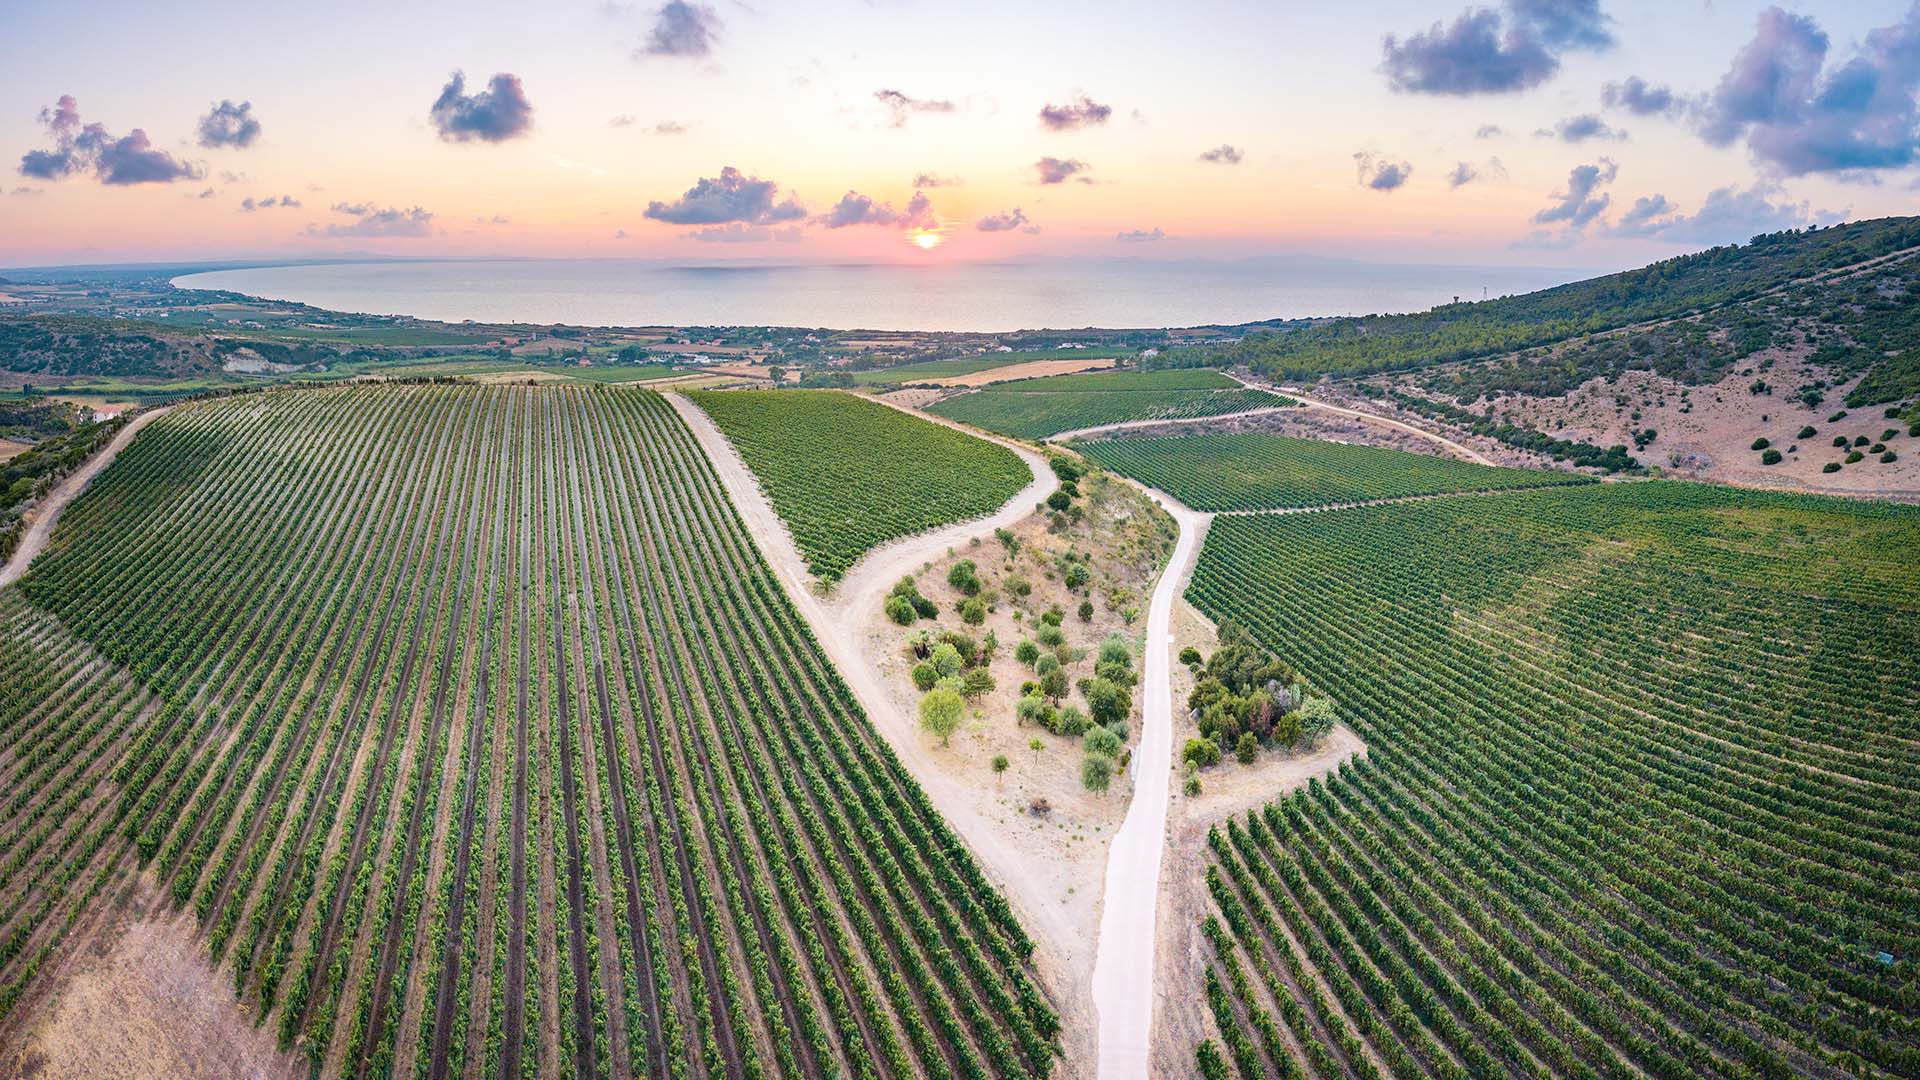 Aerial view of vineyards in Sardinia, Italy